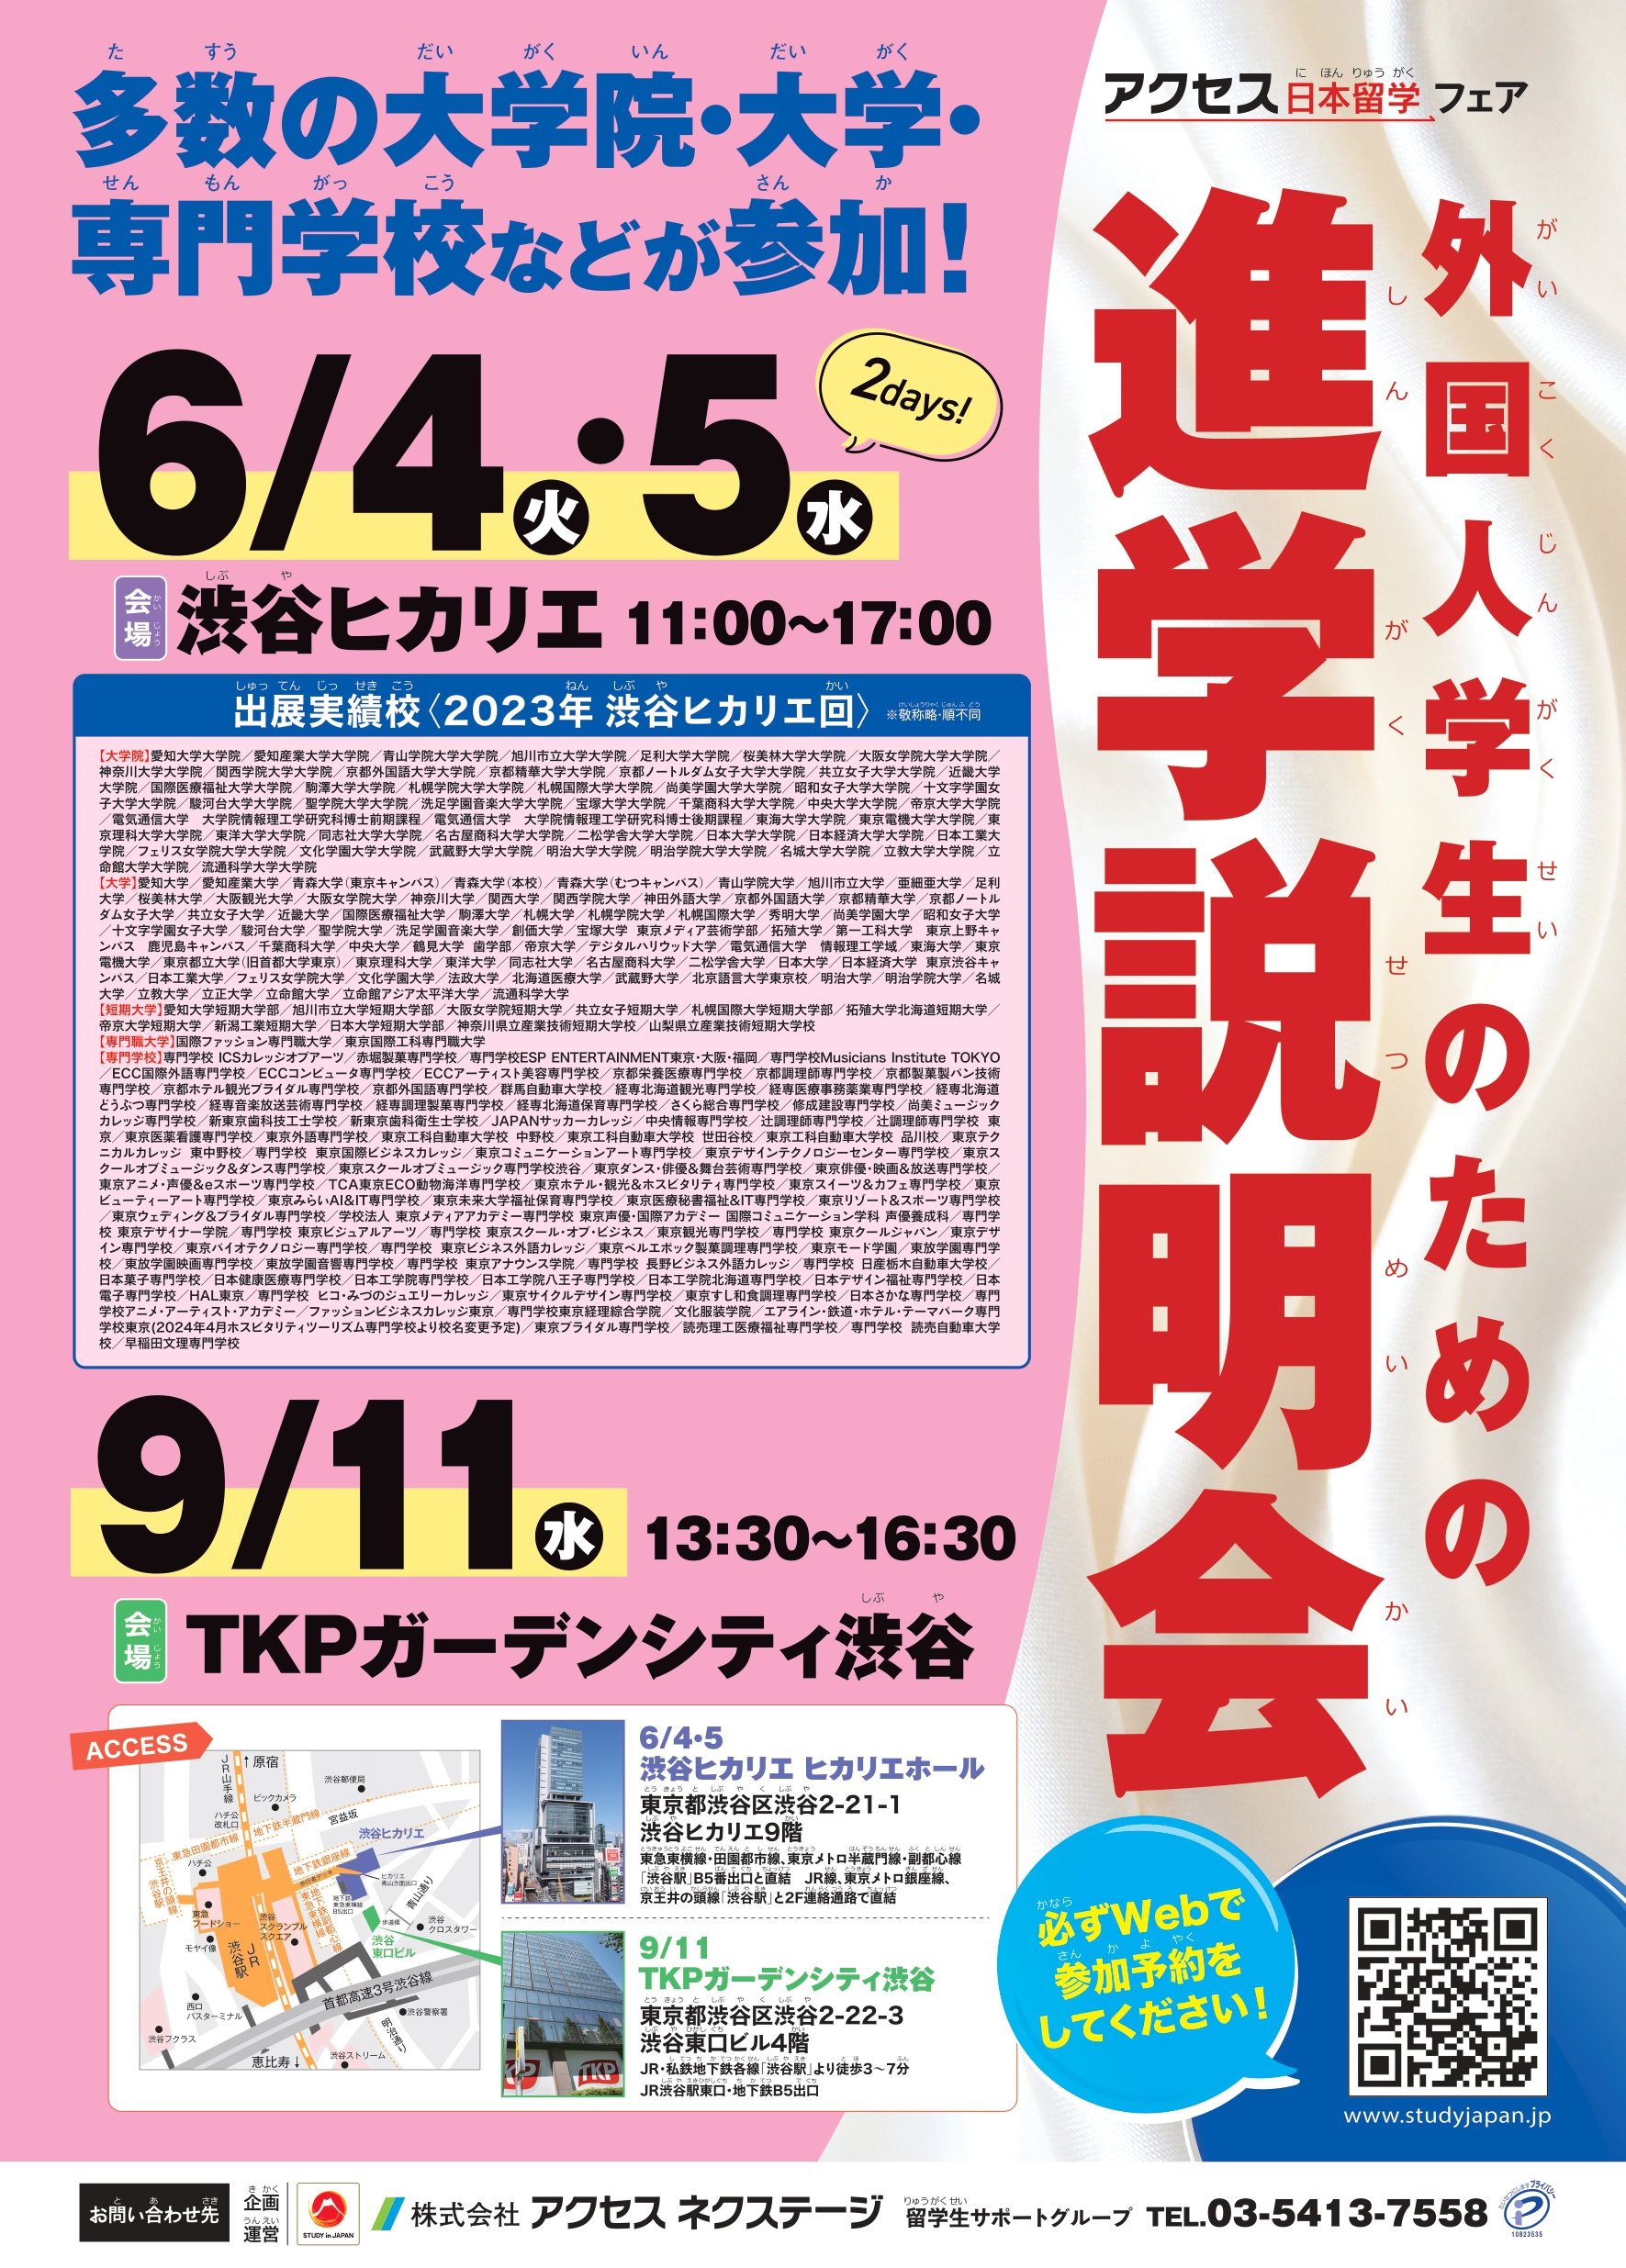 [Hikarie] Schools Guidance for International Students 4th to June 5th, 2024_Shibuya Hikarie Hall